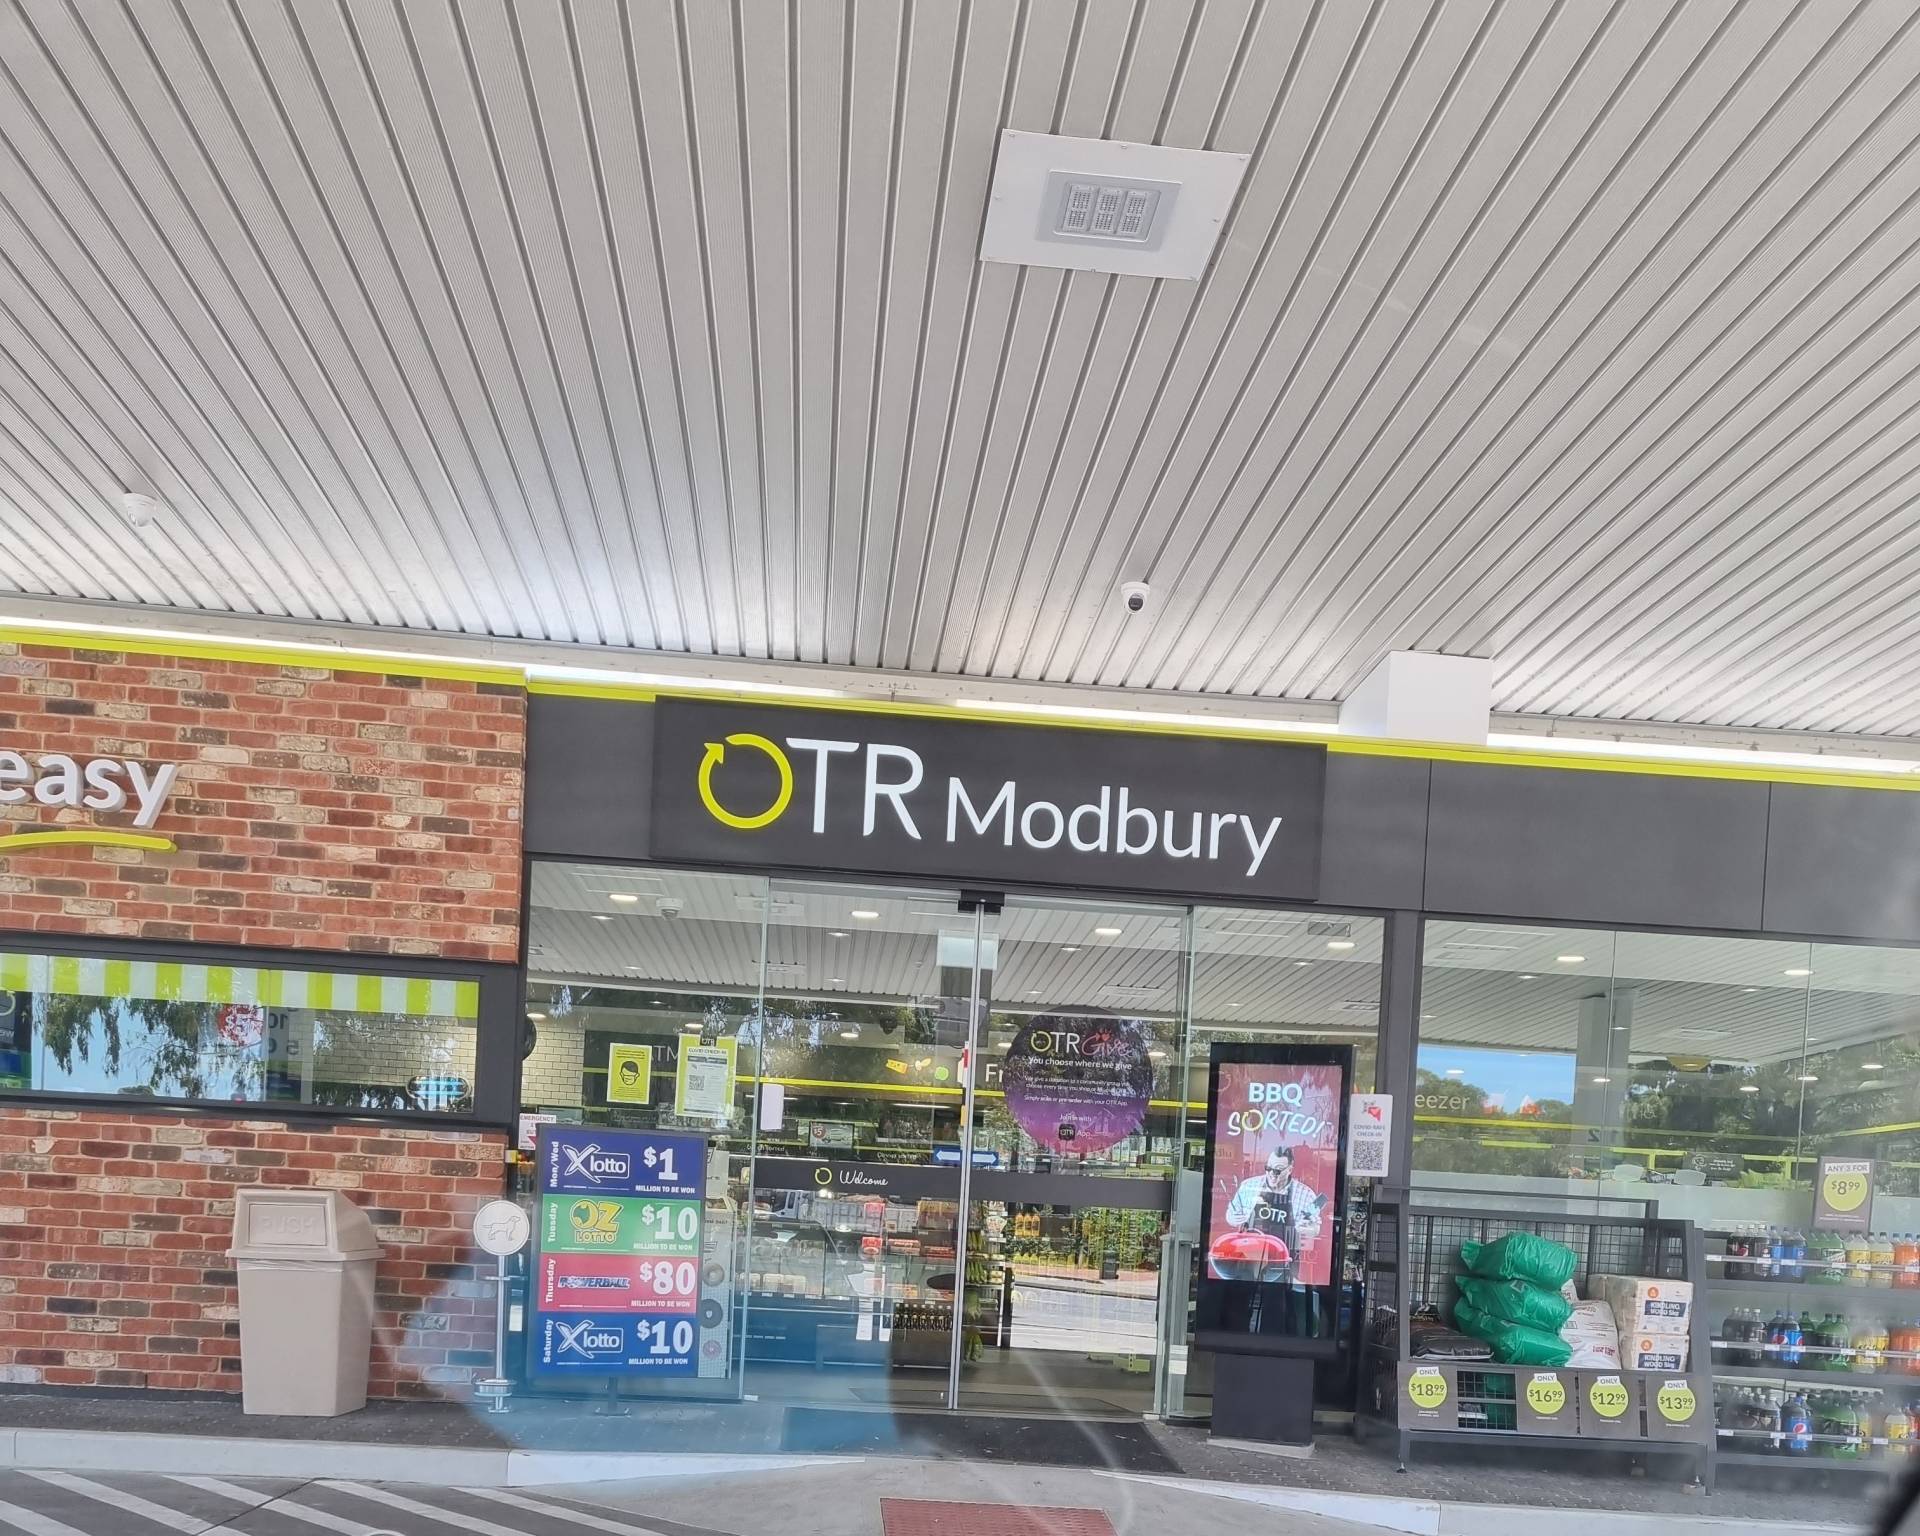 OTR Modbury